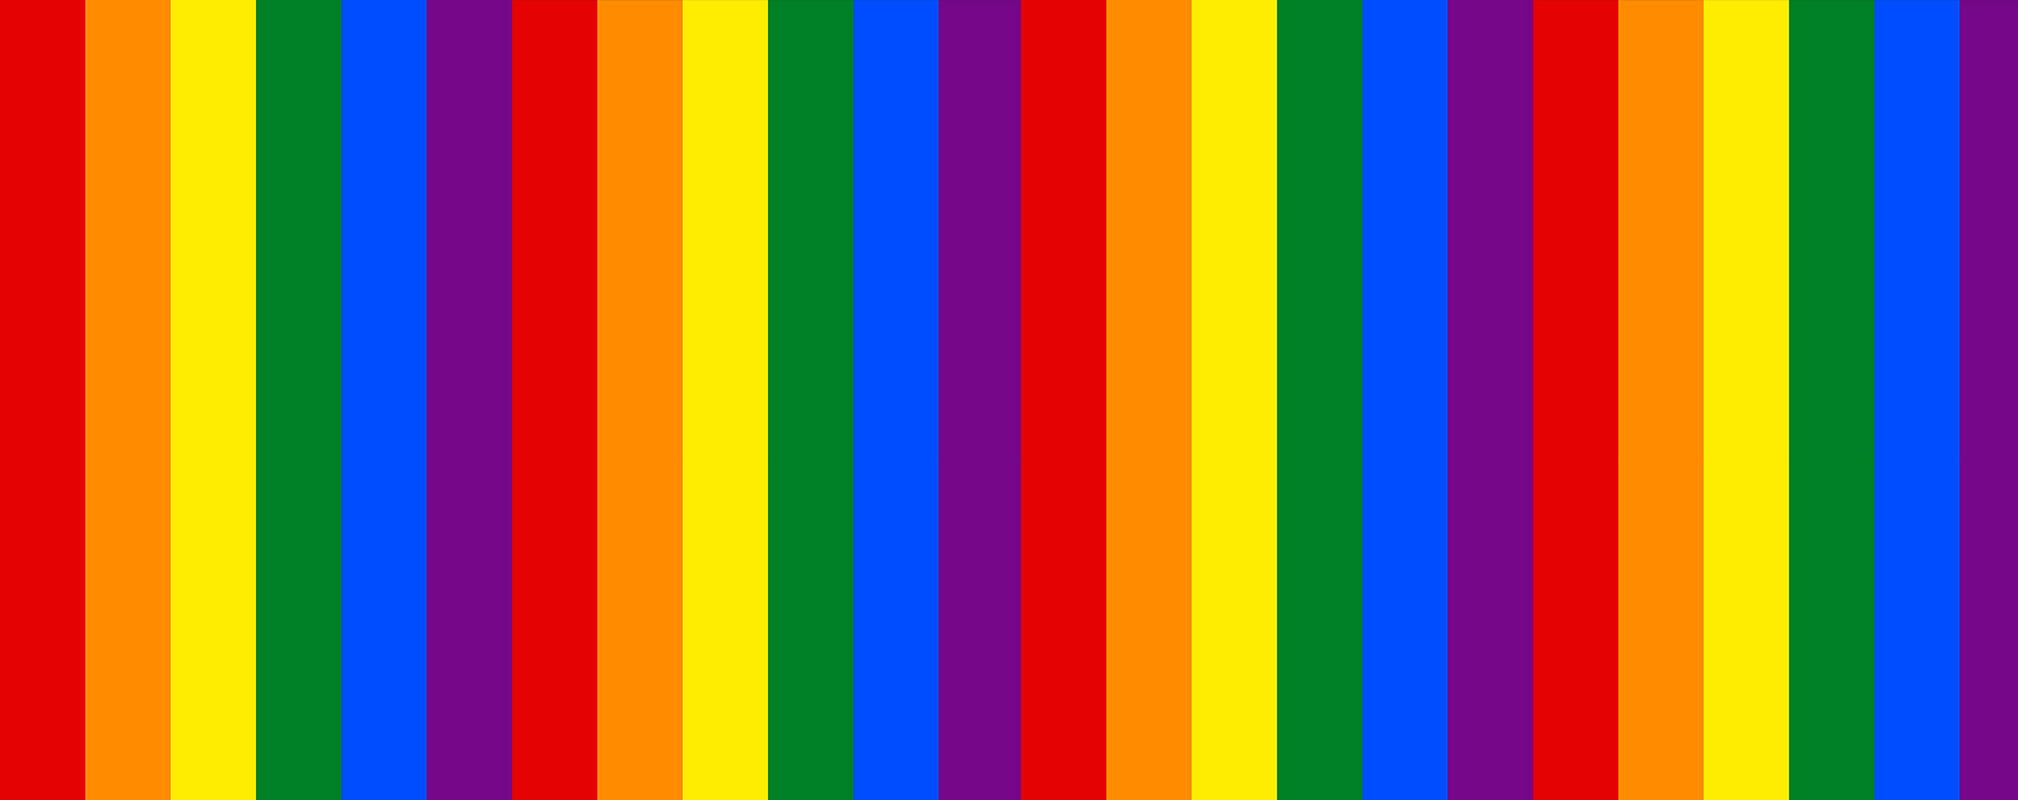 Красочный фон ЛГБТ